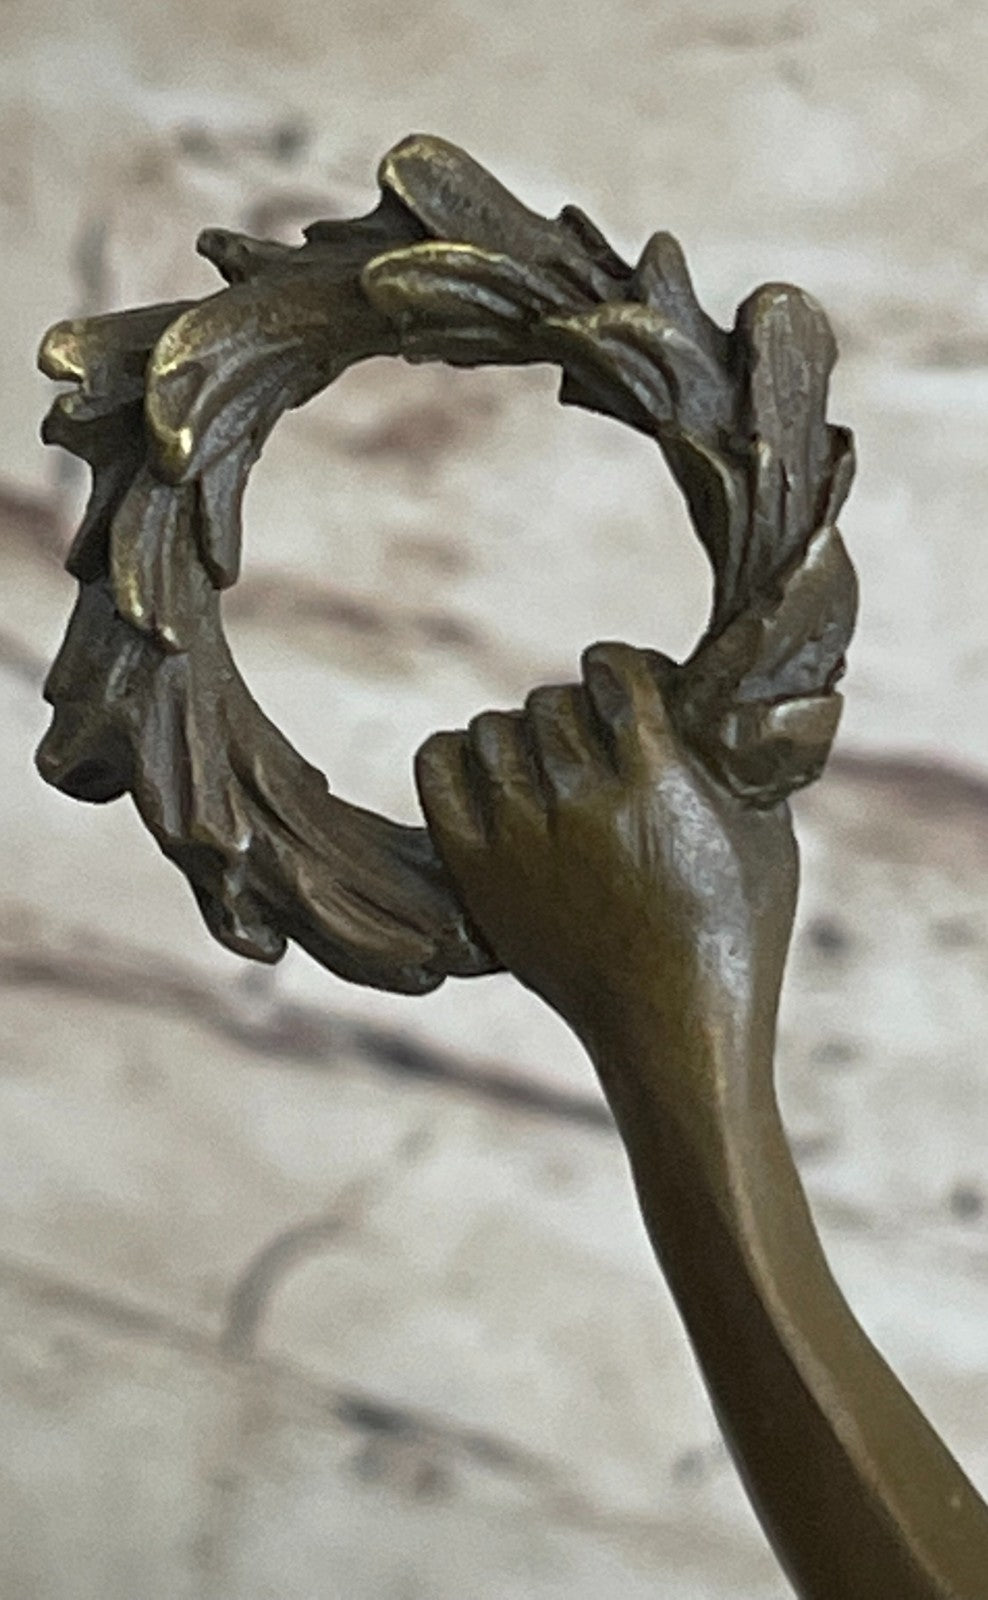 NIKE Goddess Winged Female Warrior Bronze Sculpture 16" x 8" Statue Sale Figurine